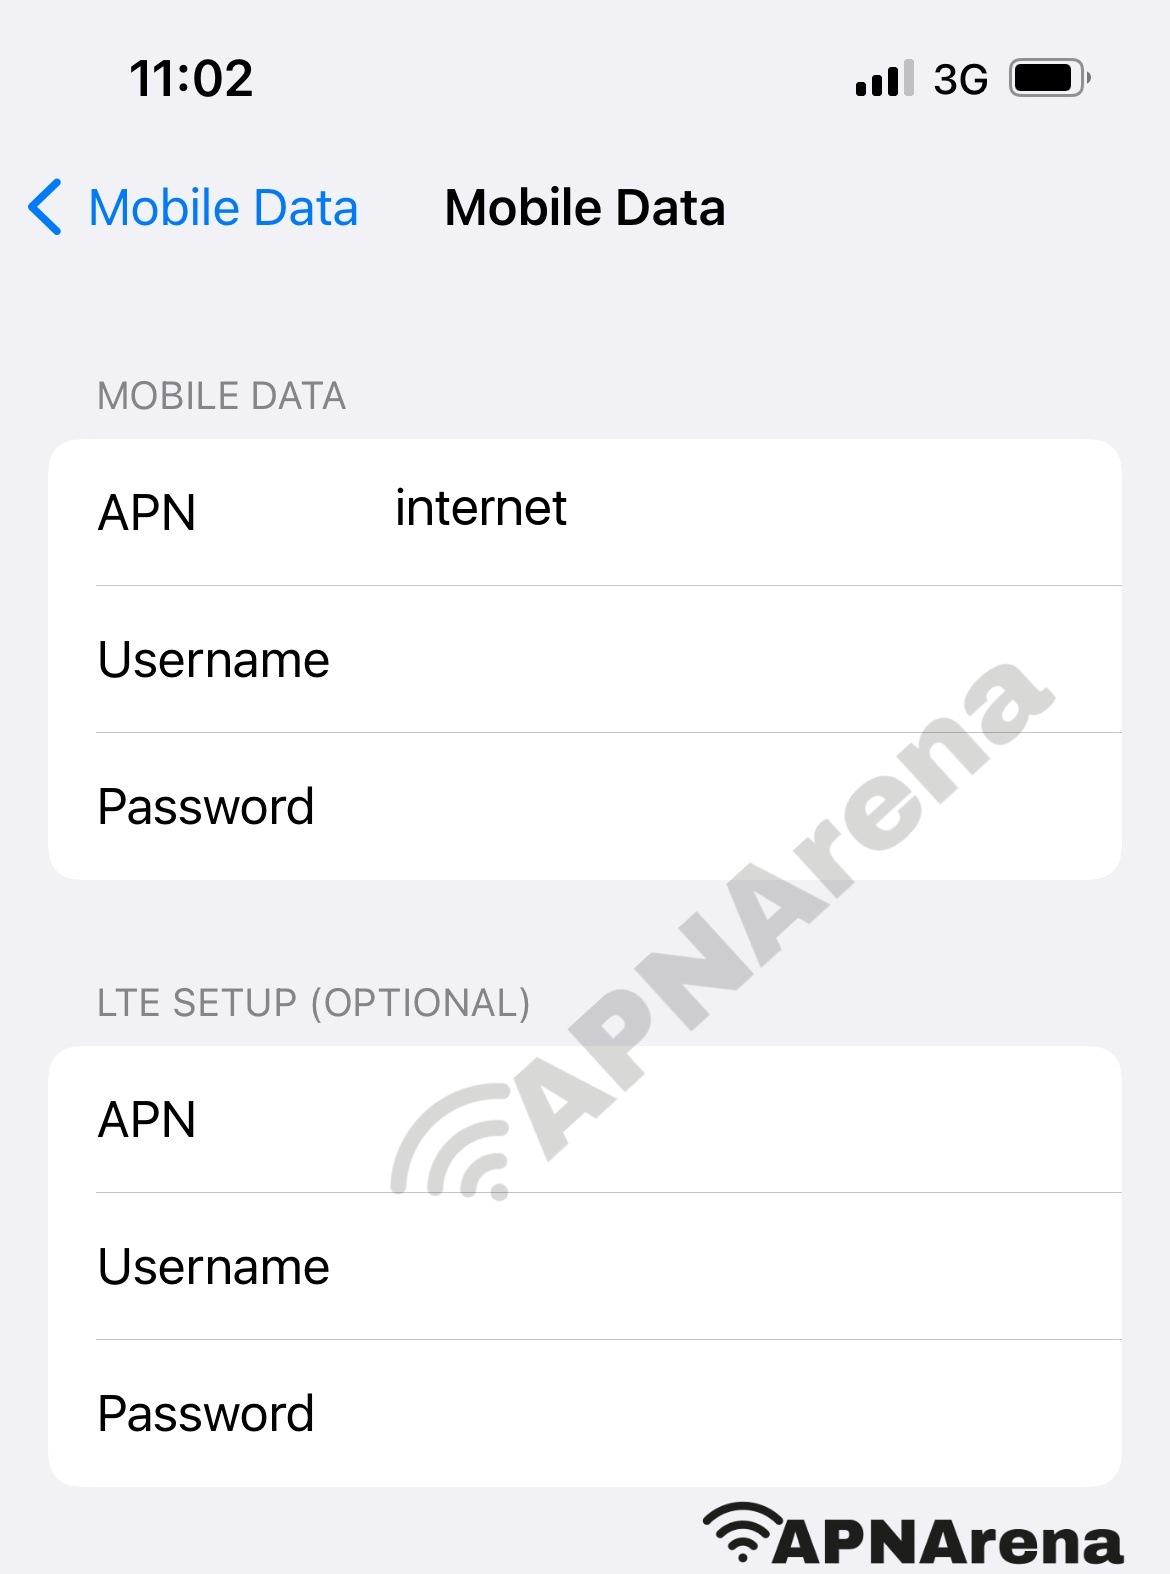 A1 Serbia (Vip mobile) APN Settings for iPhone